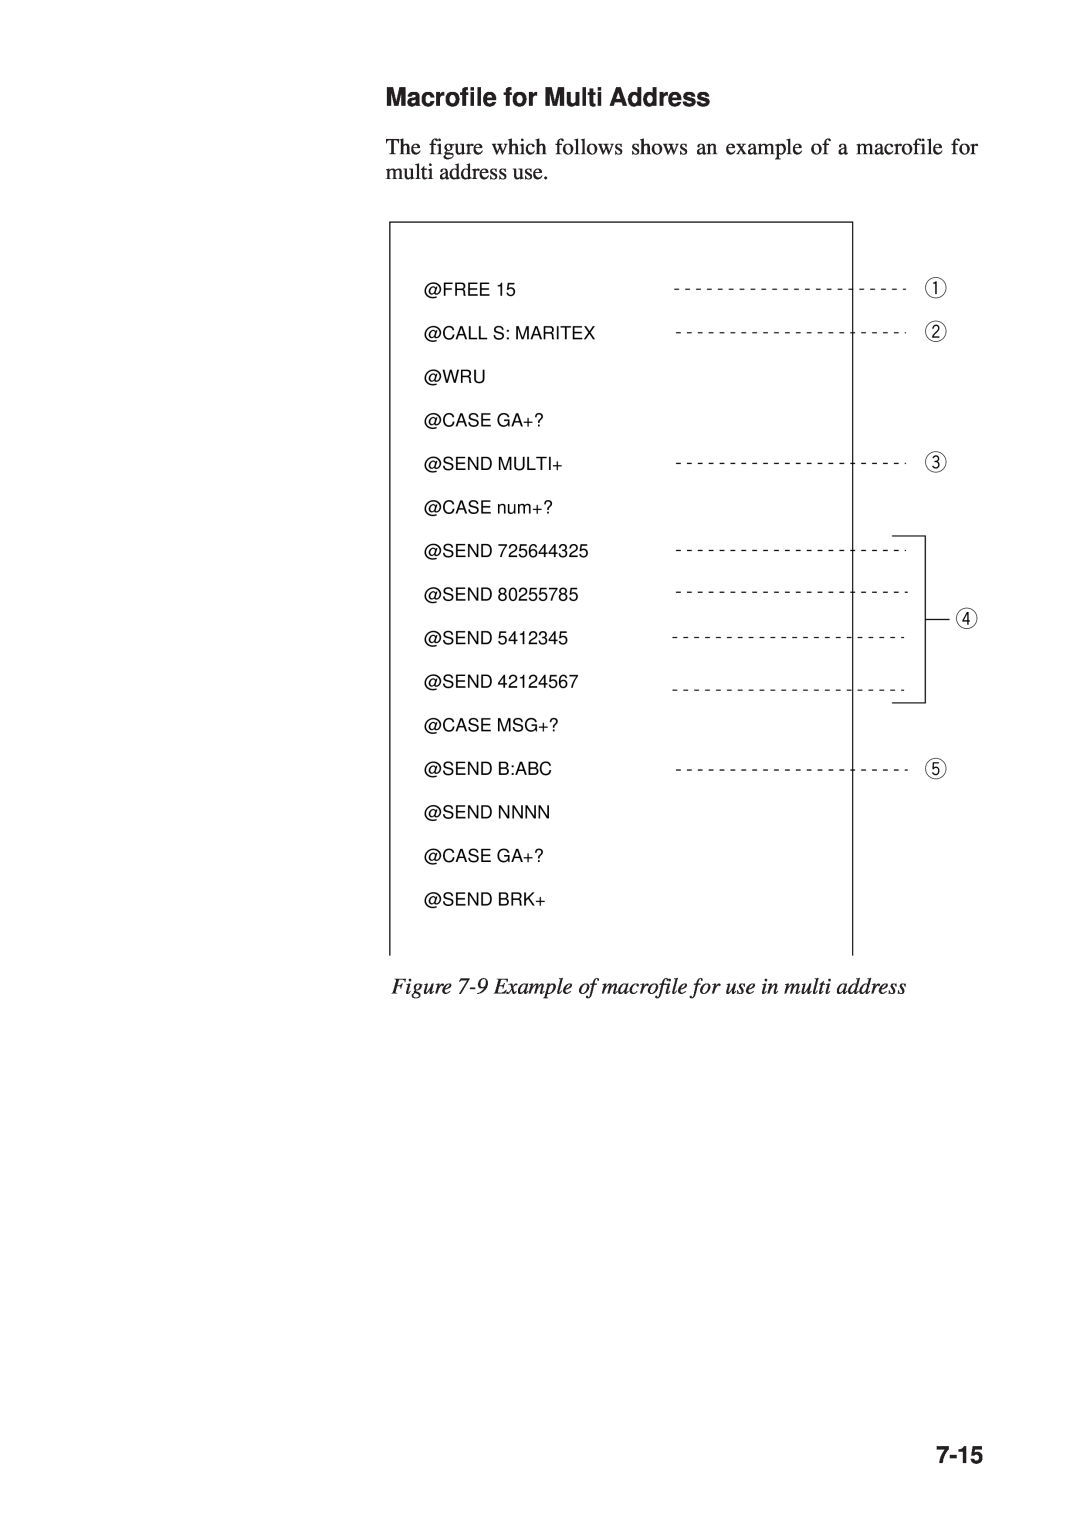 Furuno RC-1500-1T manual Macrofile for Multi Address, 9 Example of macrofile for use in multi address, 7-15 